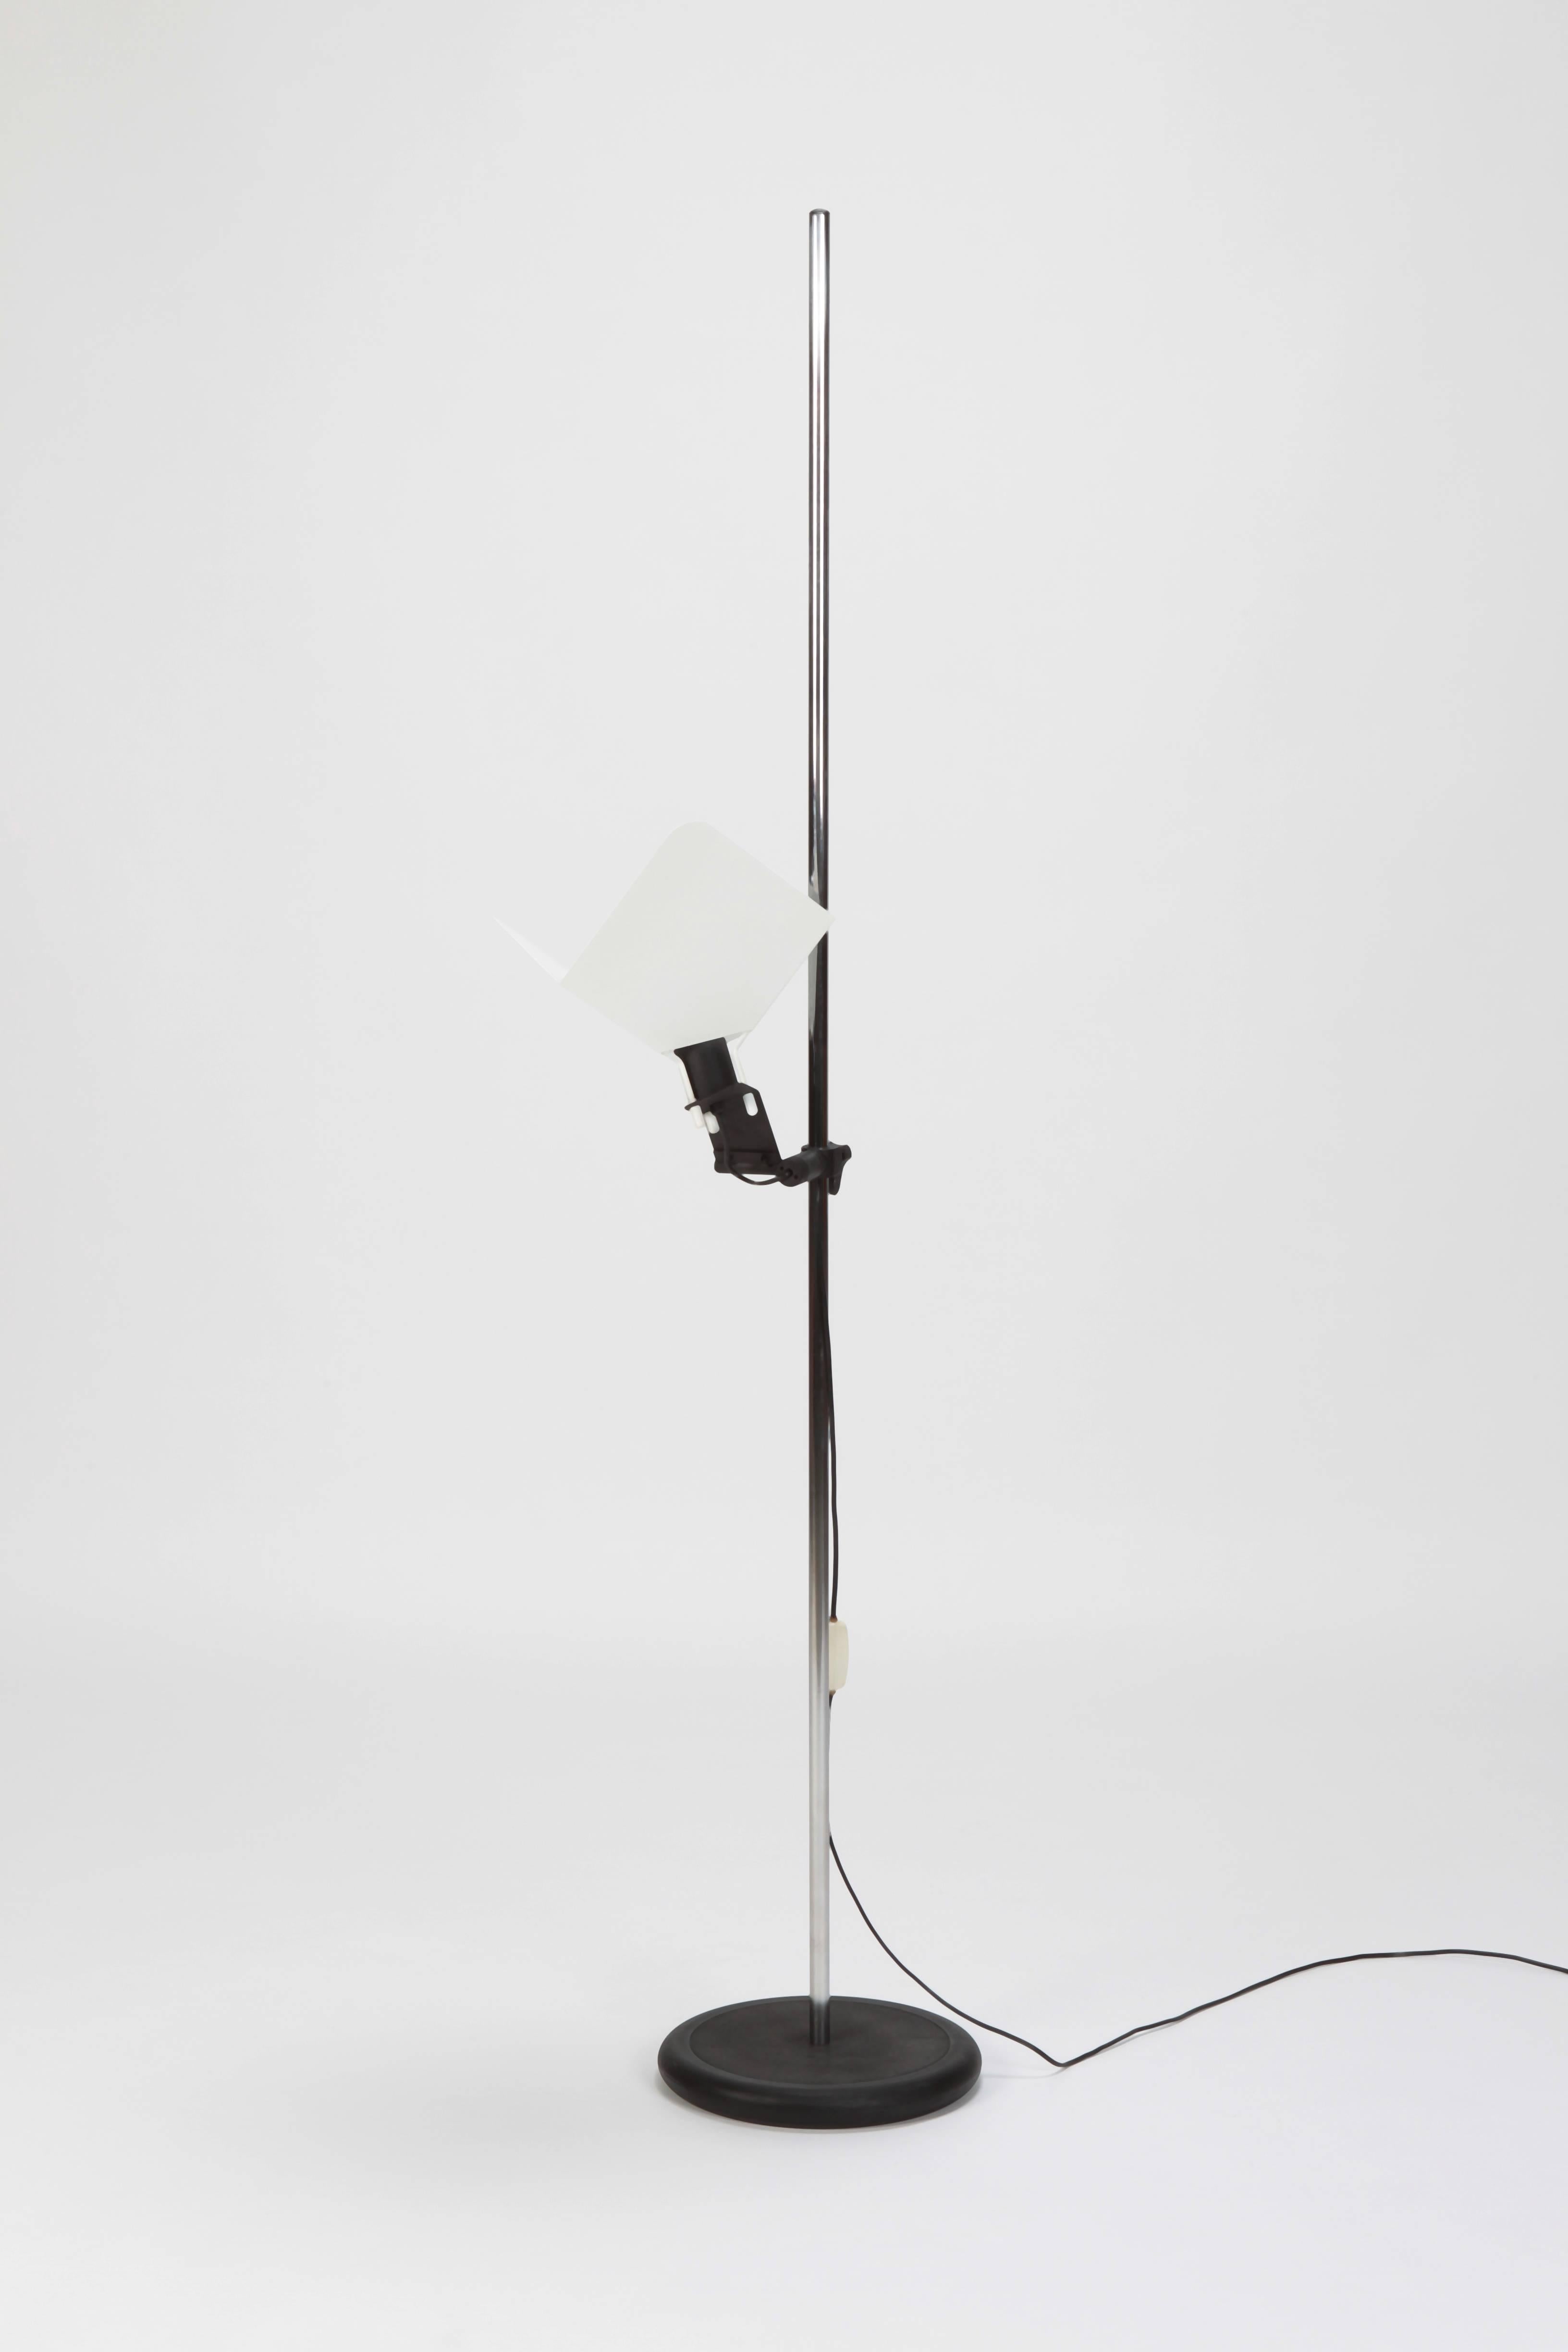 Joe Colombo “Triedro” Floor Lamp Stilnovo, 1970s For Sale 11